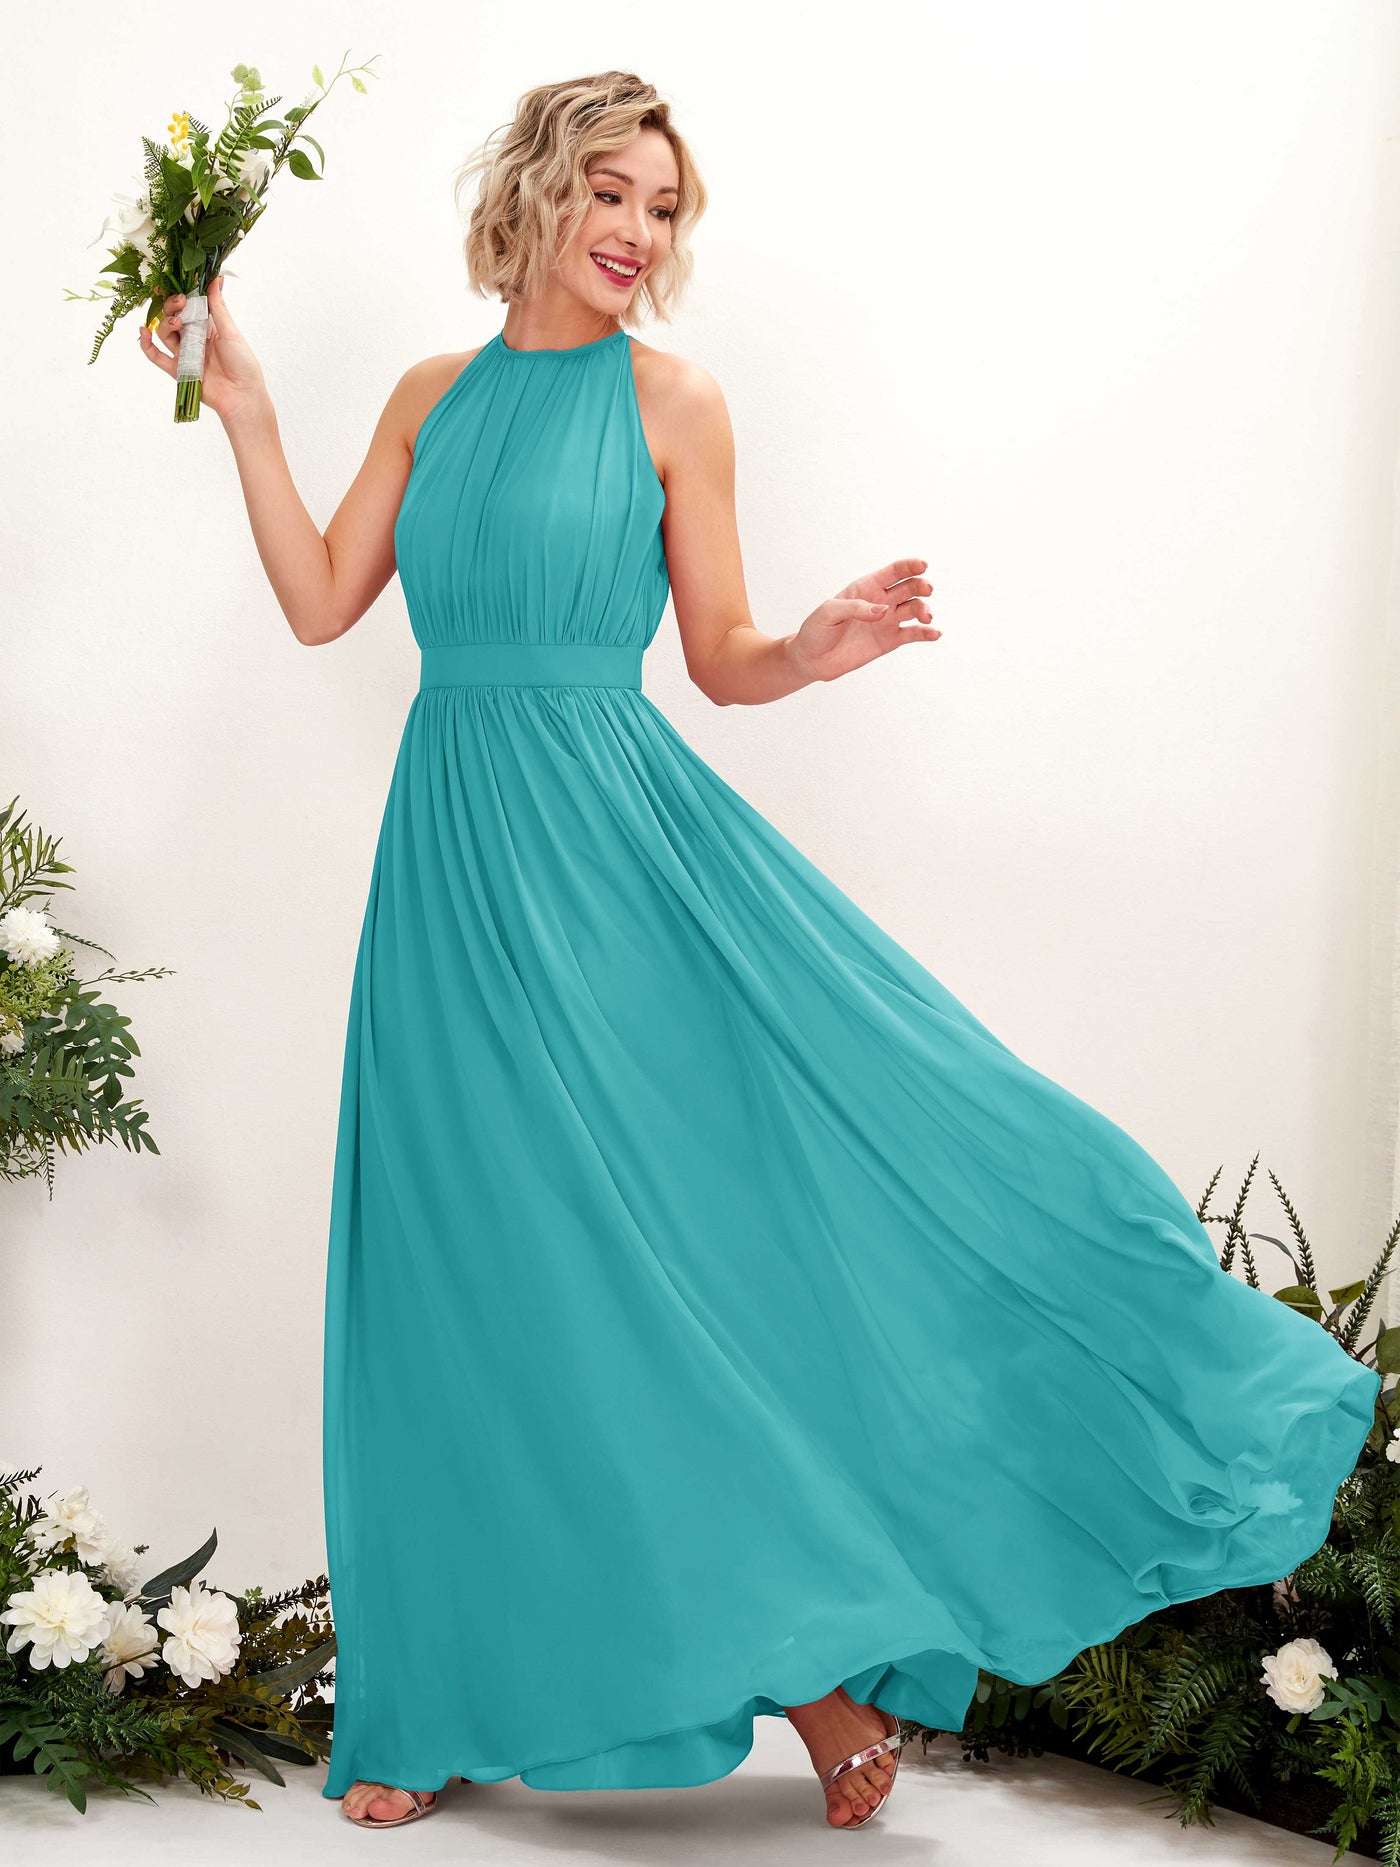 turquoise wedding dress